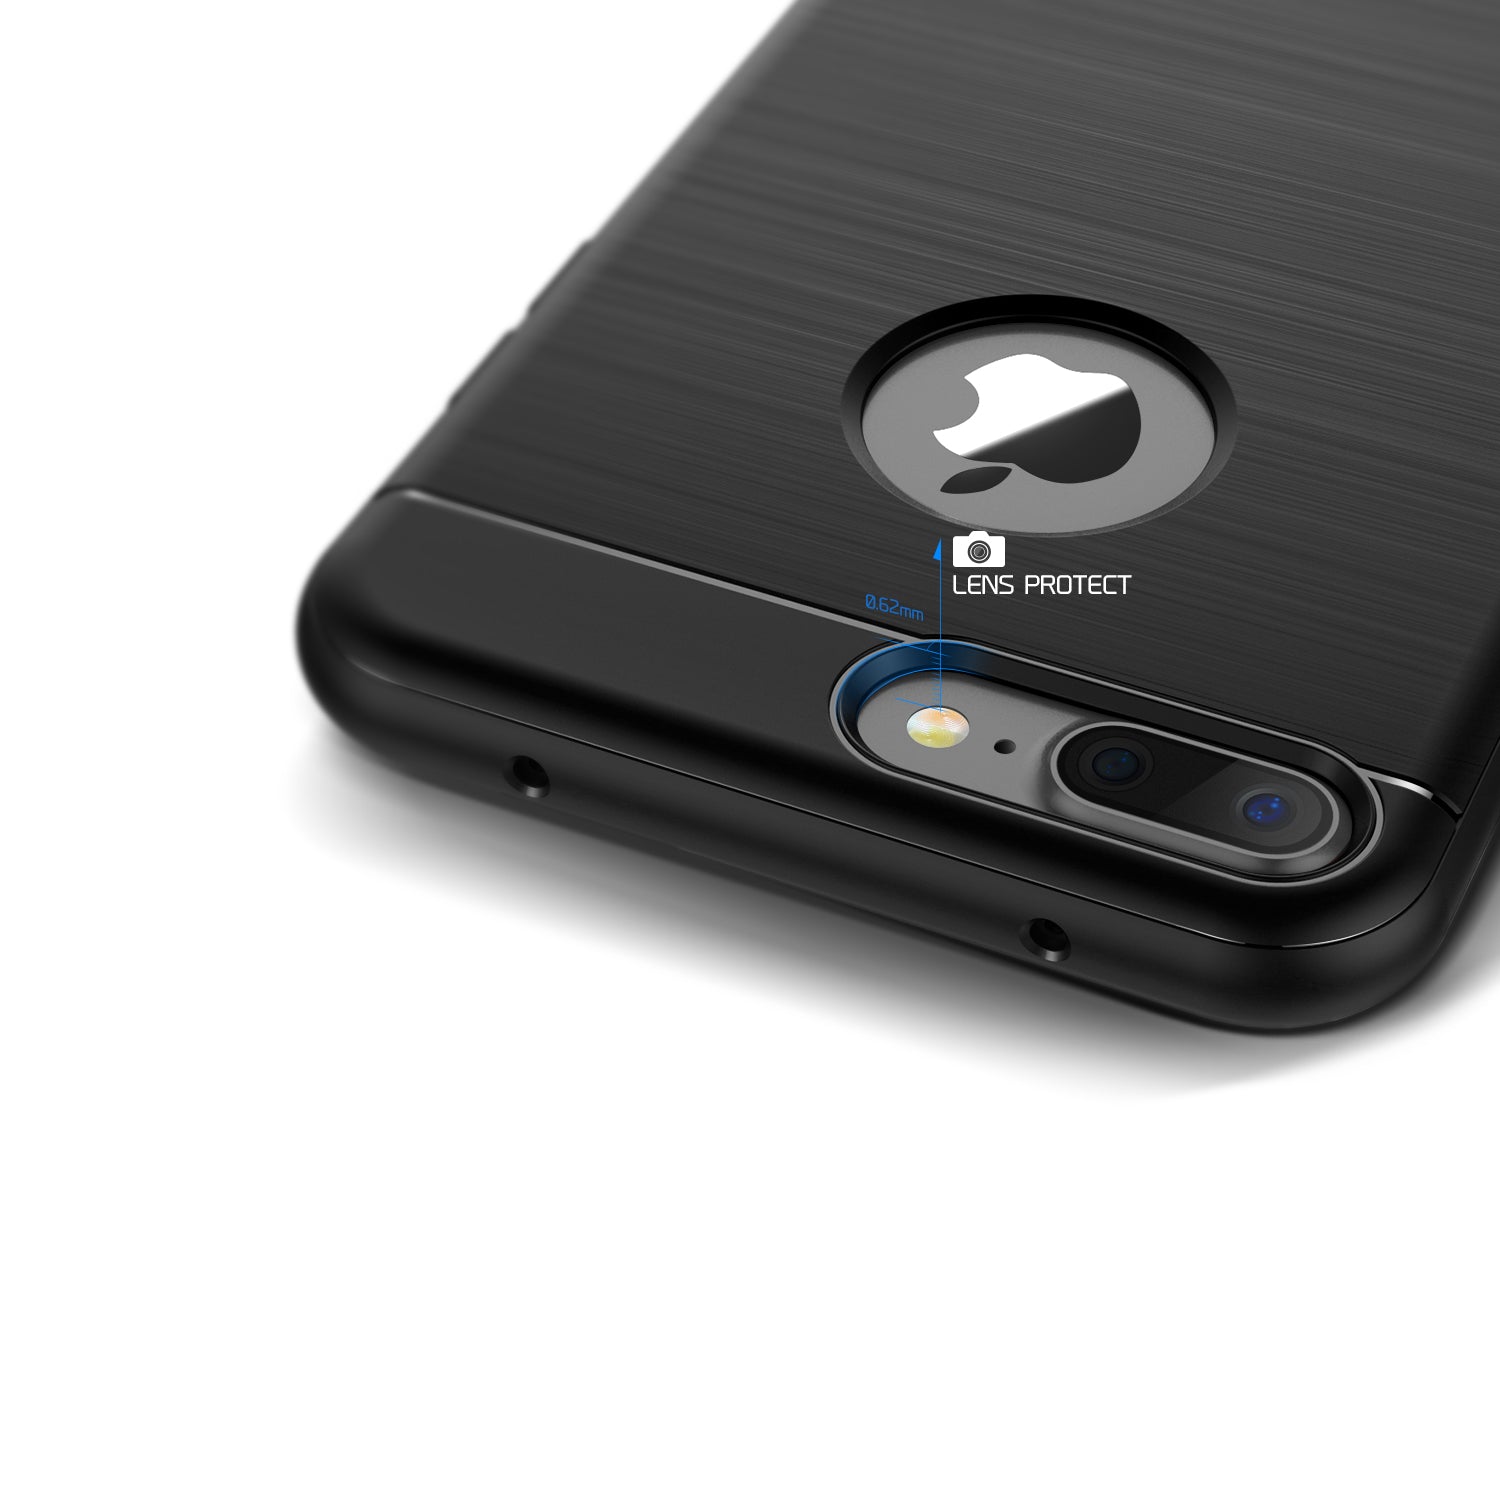 Simpli Fit Series Original From VRS Design Slim and Flexible Case For iPhone 7 Plus Black